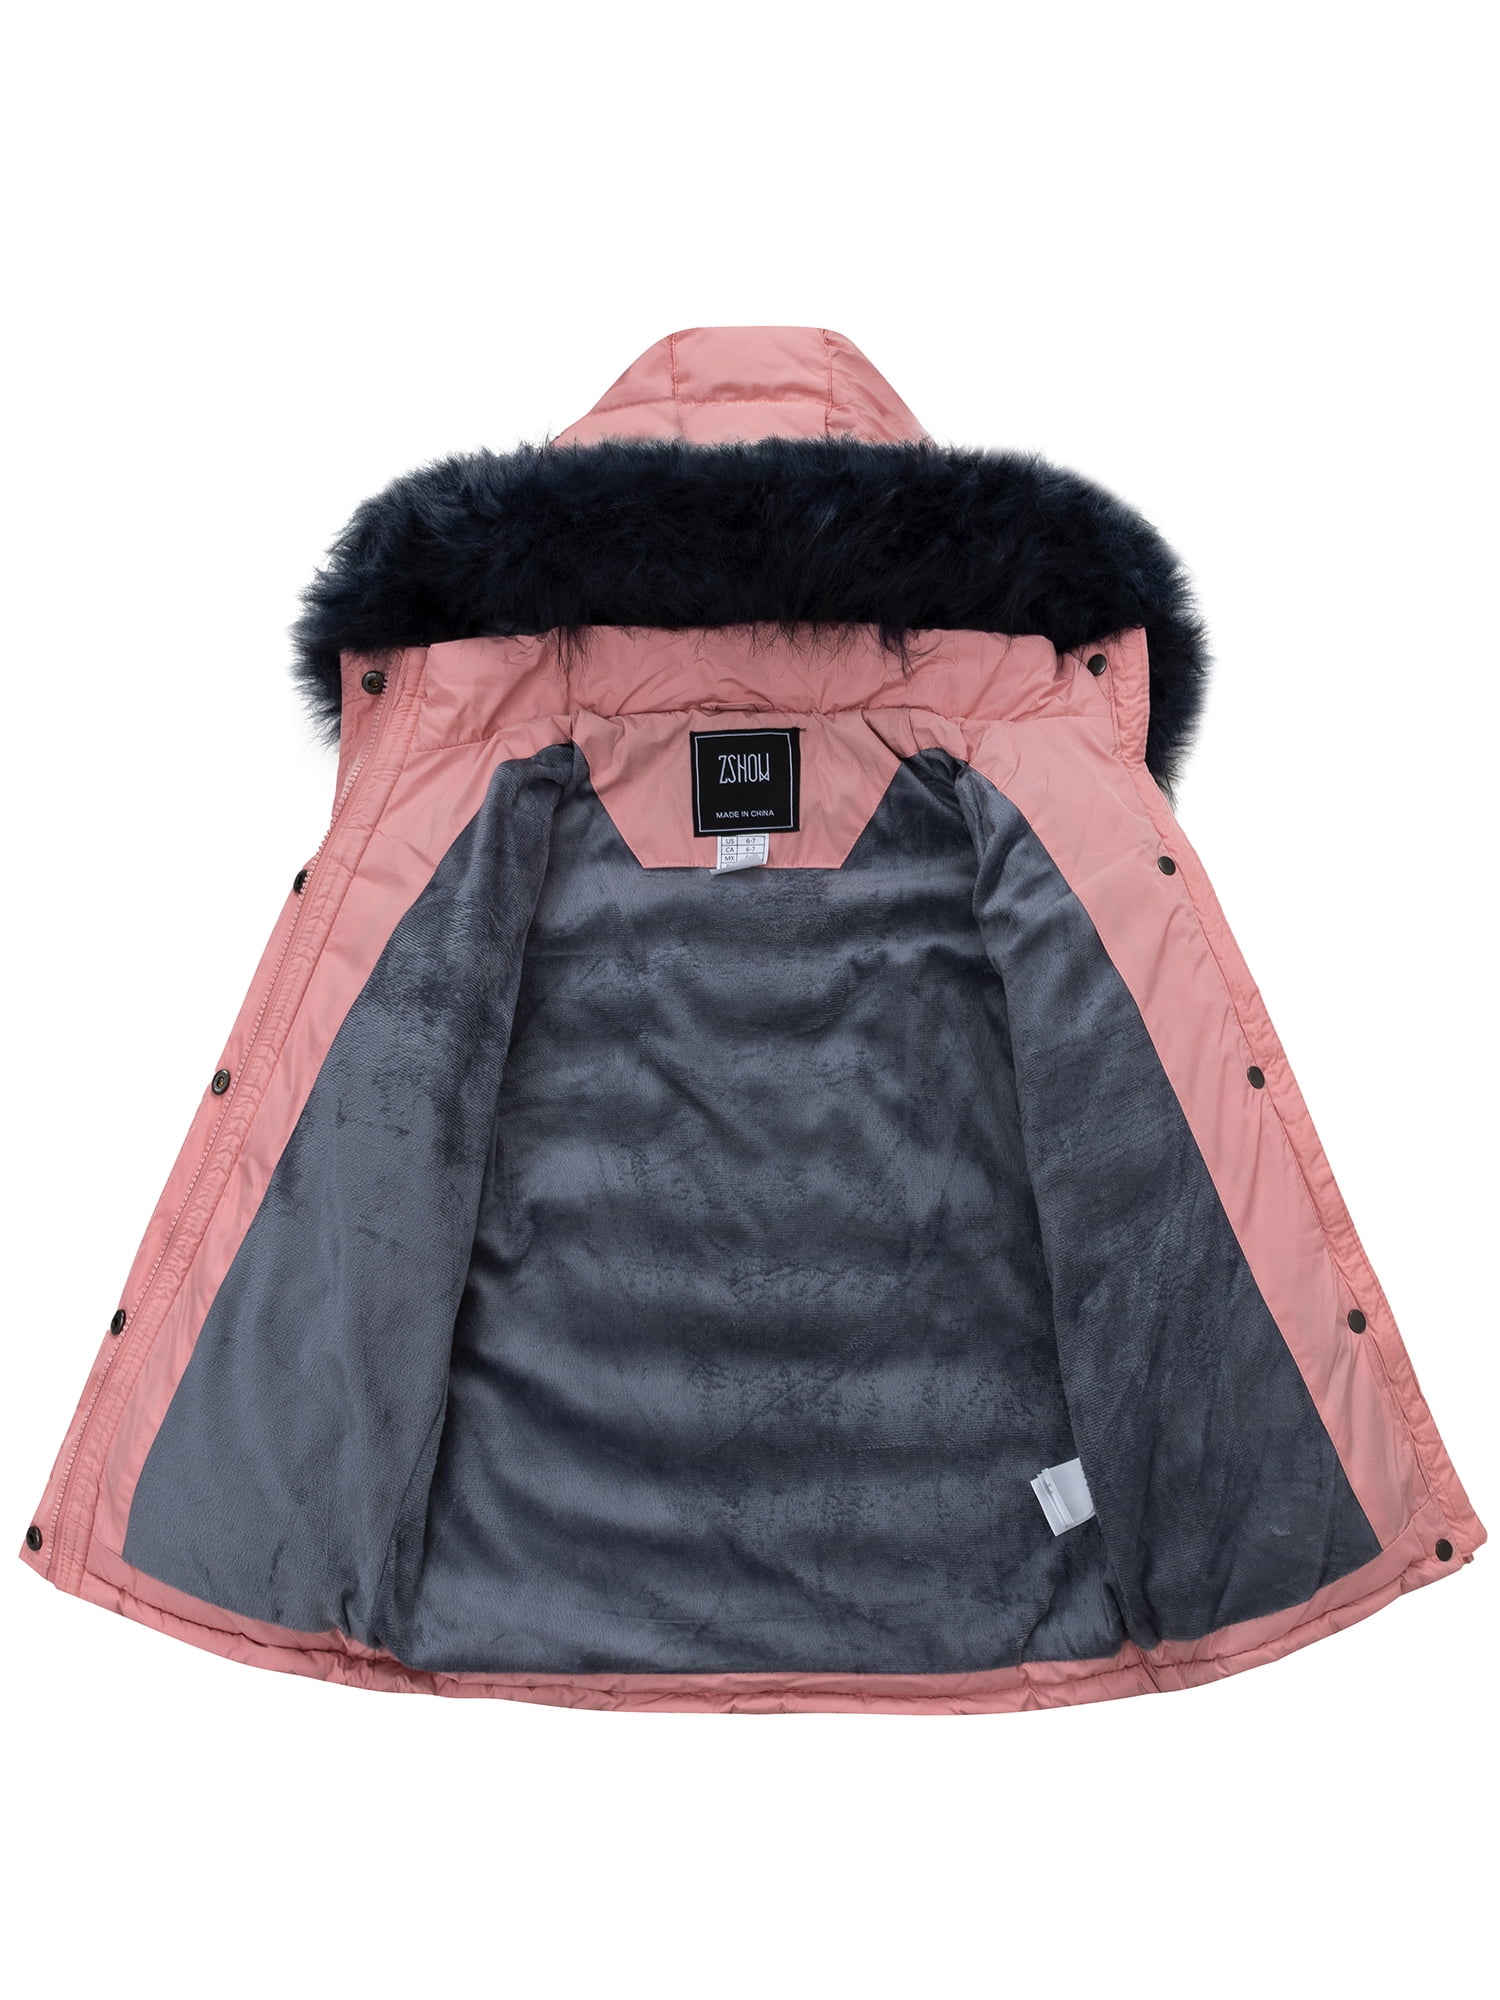 ZSHOW Girls\' Puffer Winter 14/16 Waterptproof Coat Jacket Jacket Padded Windproof Pink Puffy Coral